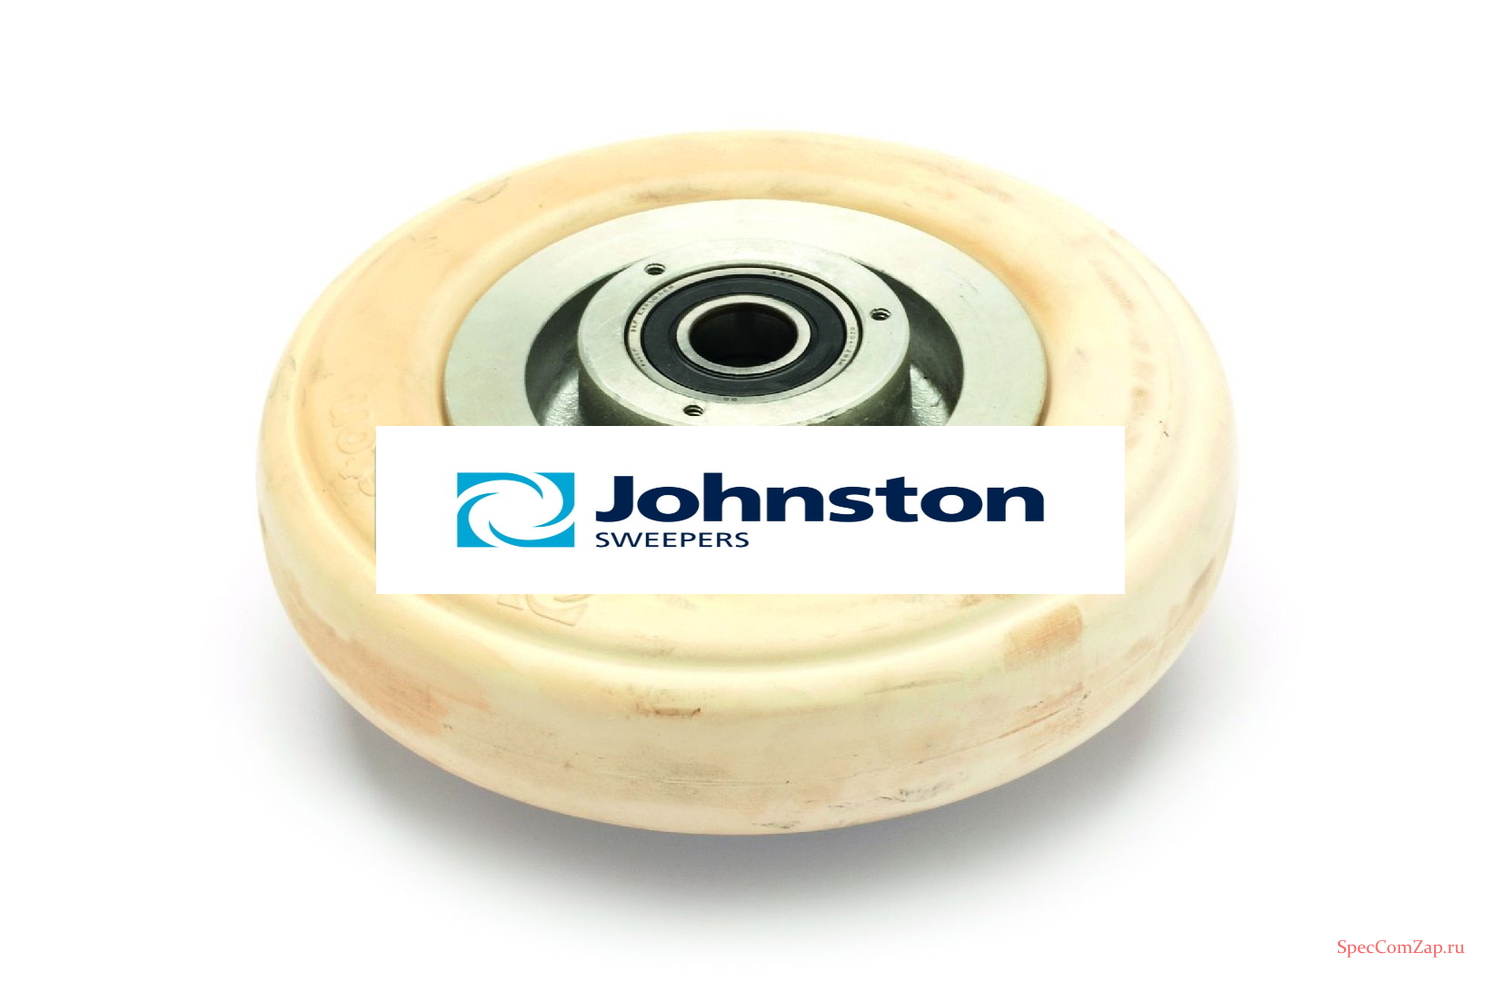 Опорное колесо шахты Johnston 201 720272-1